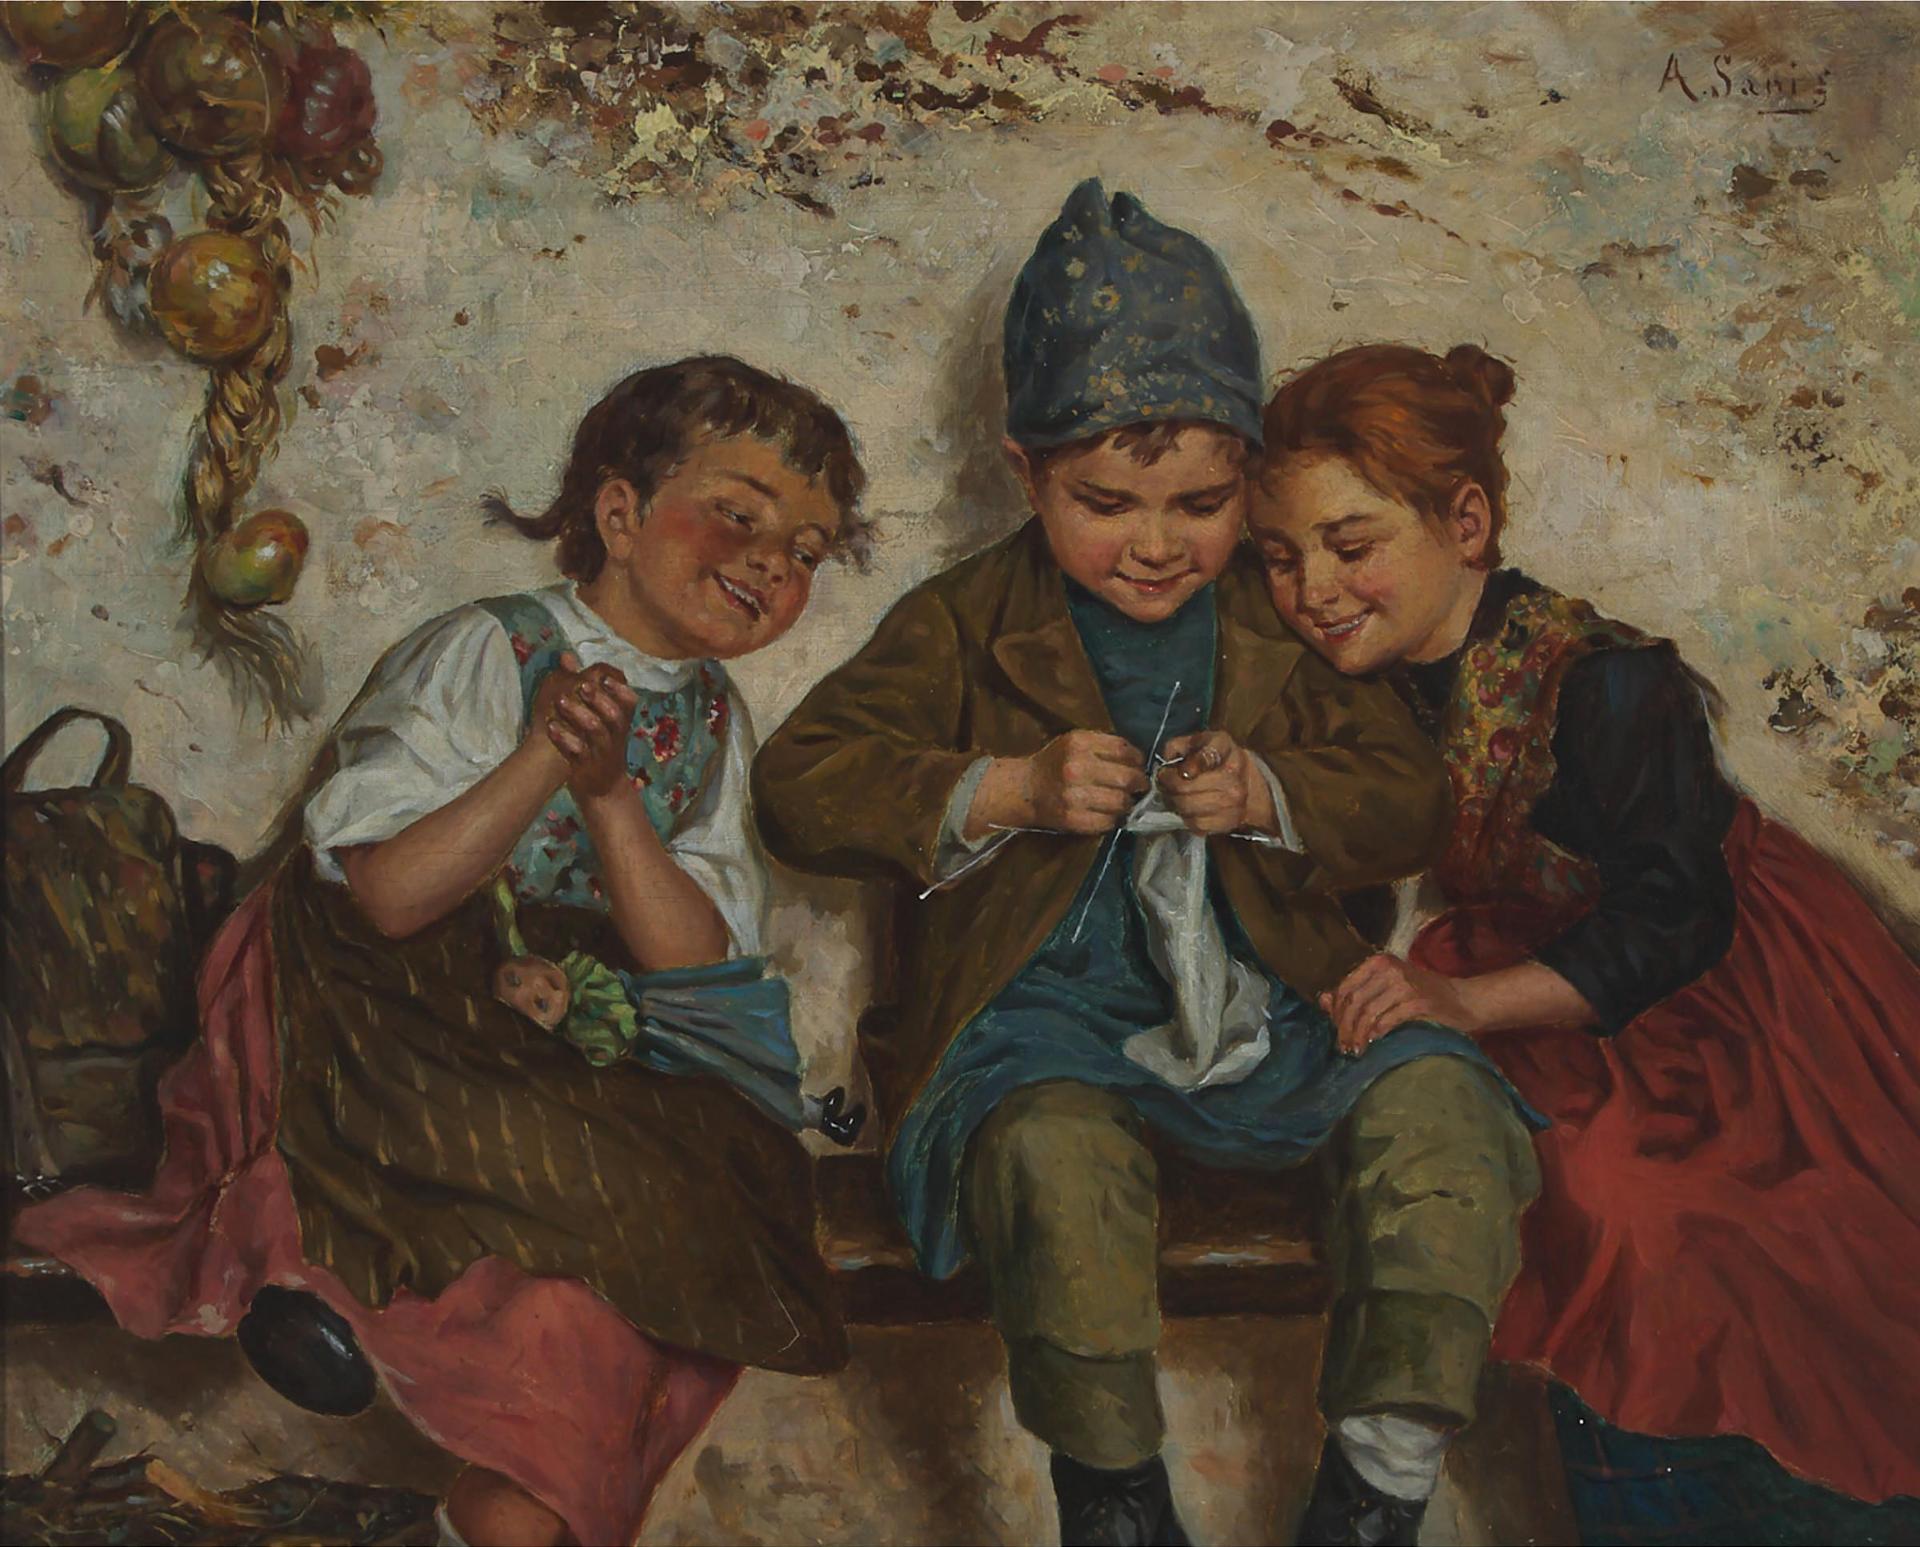 Alessandro Sani (1856) - The Knitting Lesson